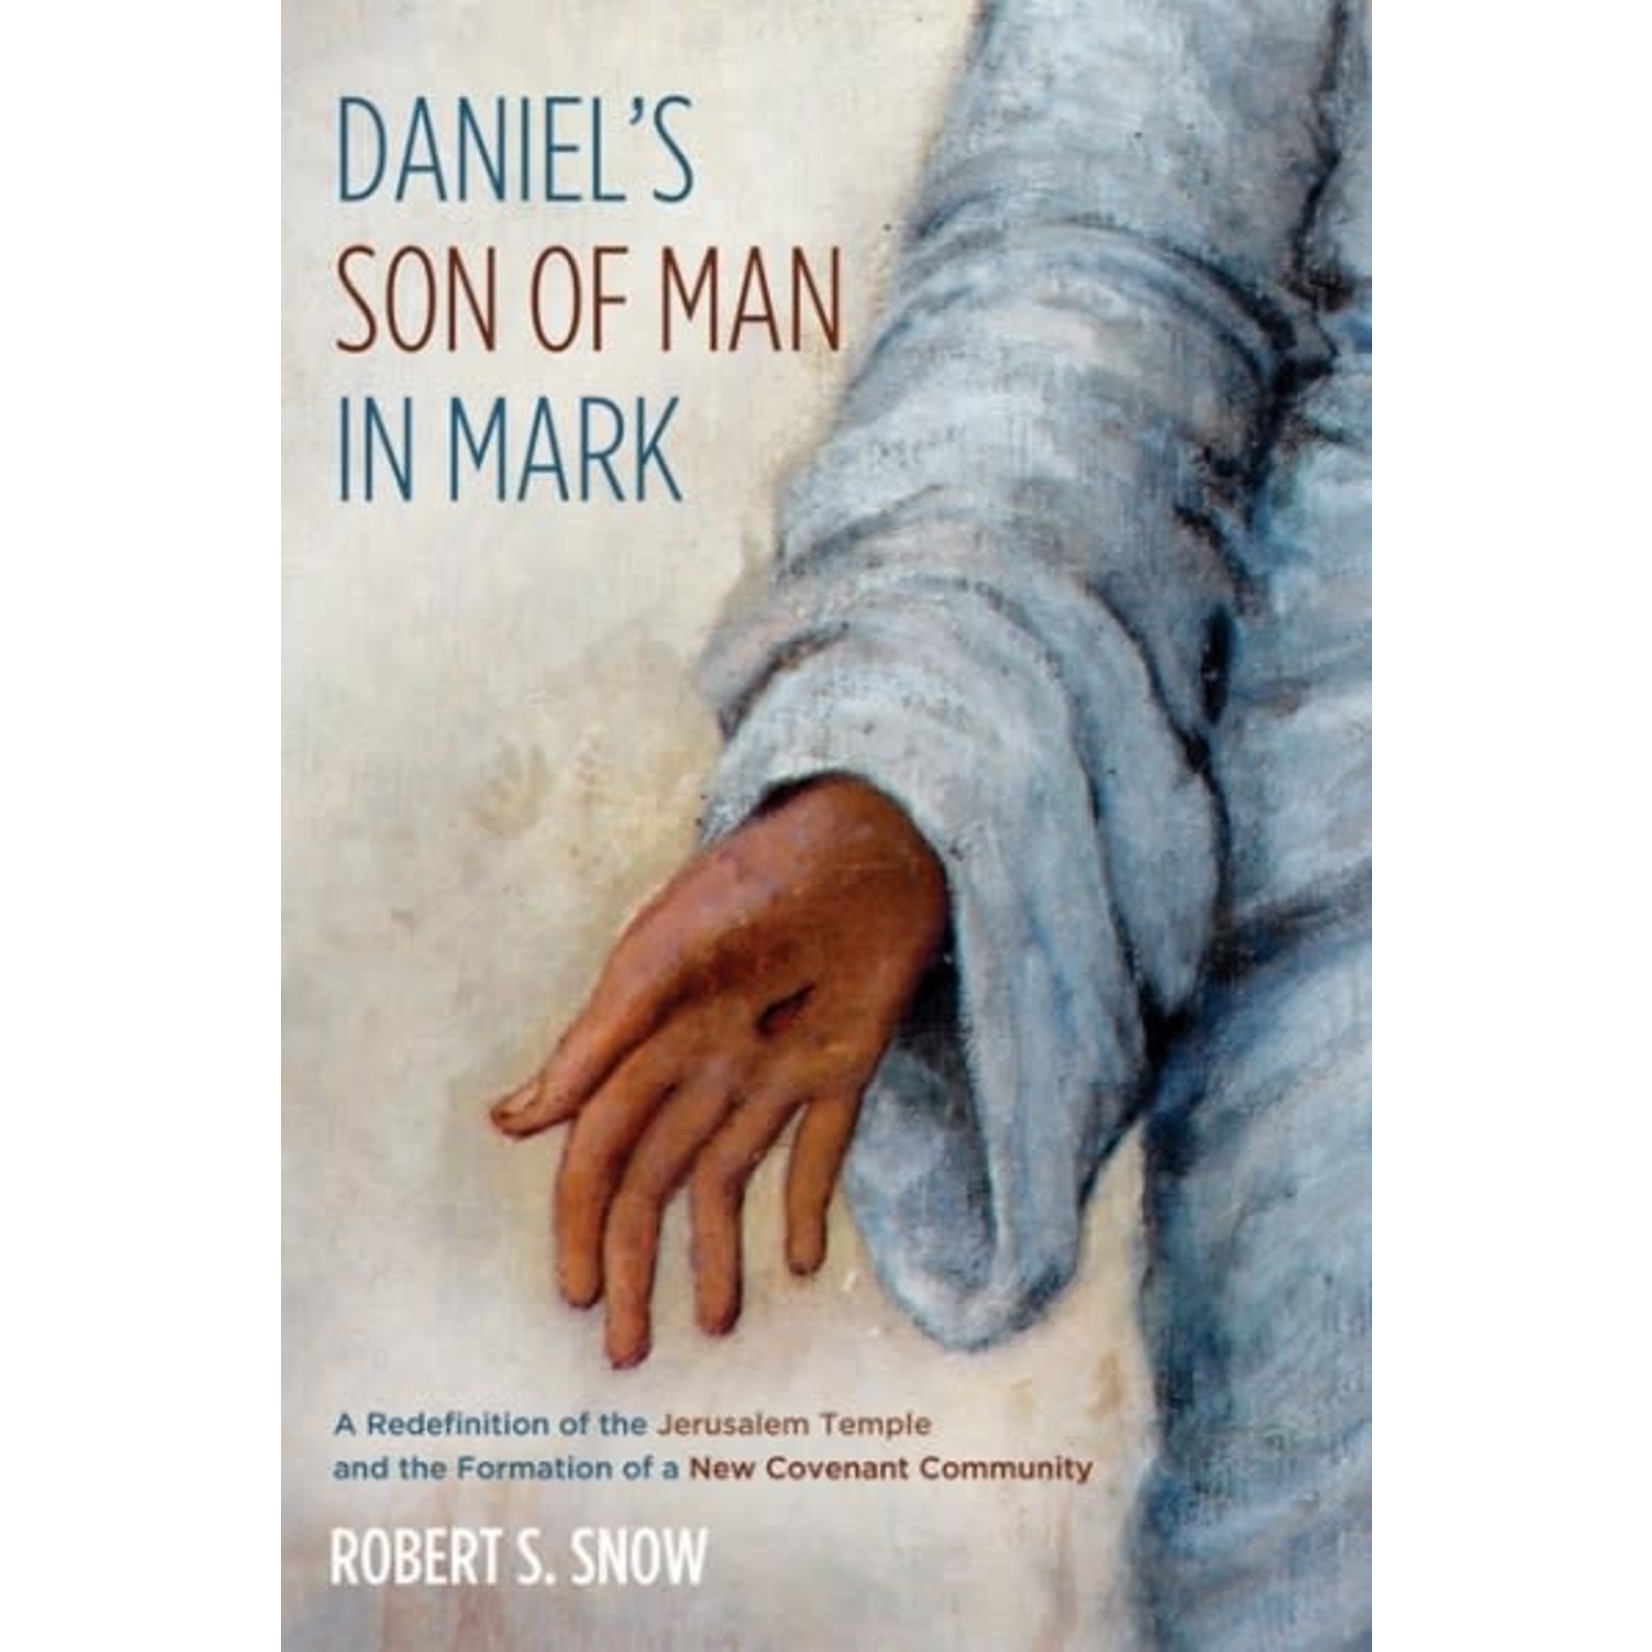 Daniel's Son of Man in Mark - Robert S. Snow